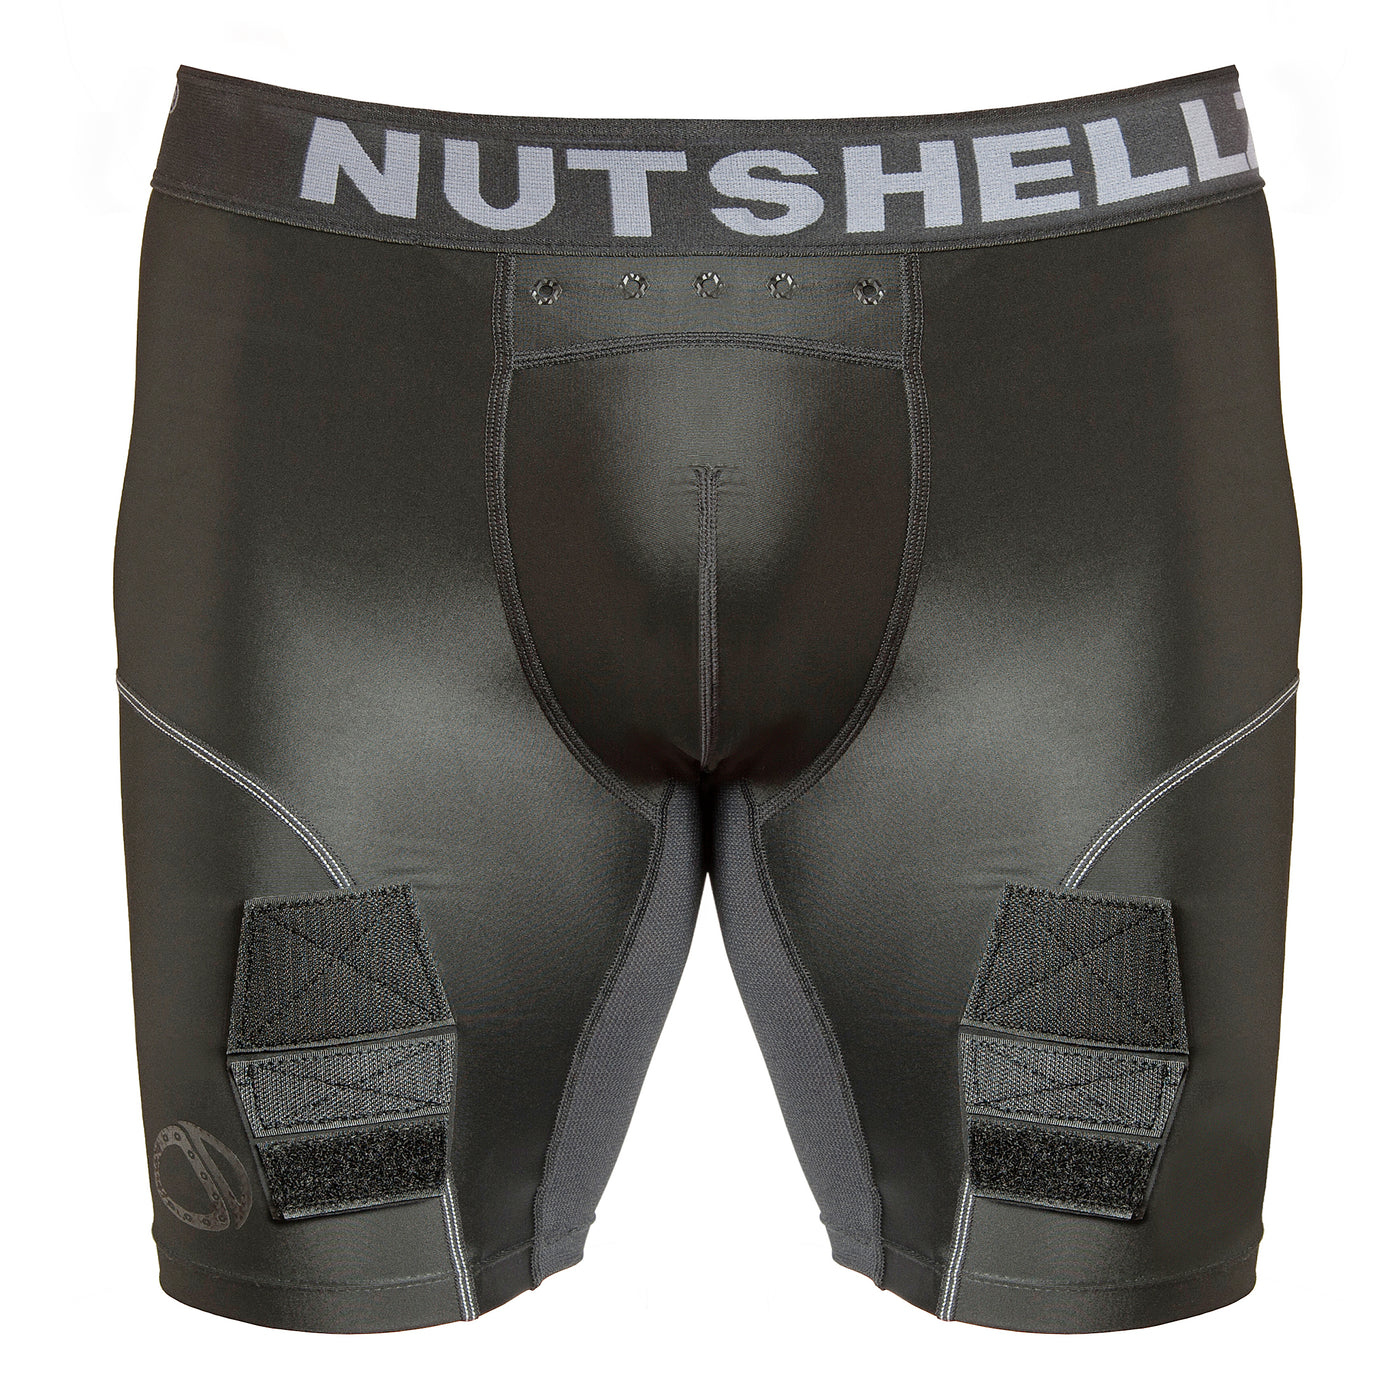 Nutshellz® Armor & Hockey Jock Short Combo 2 Pack/Adult /Level 1